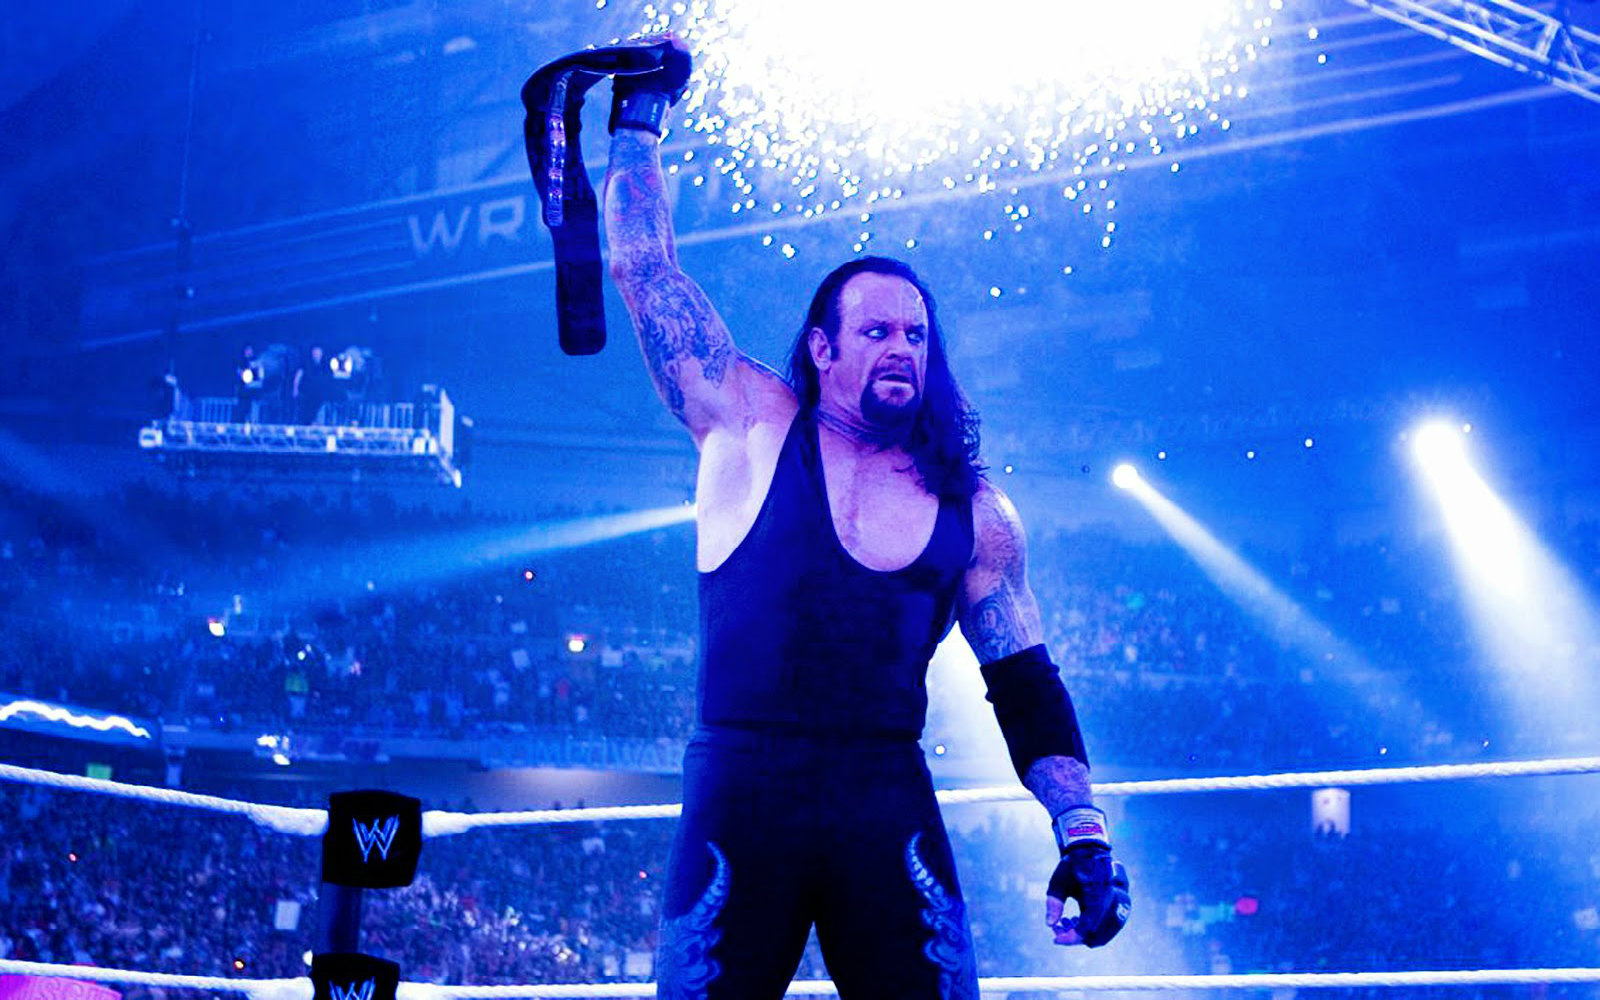 Wwe Superstar The Undertaker HD Wallpaper Image